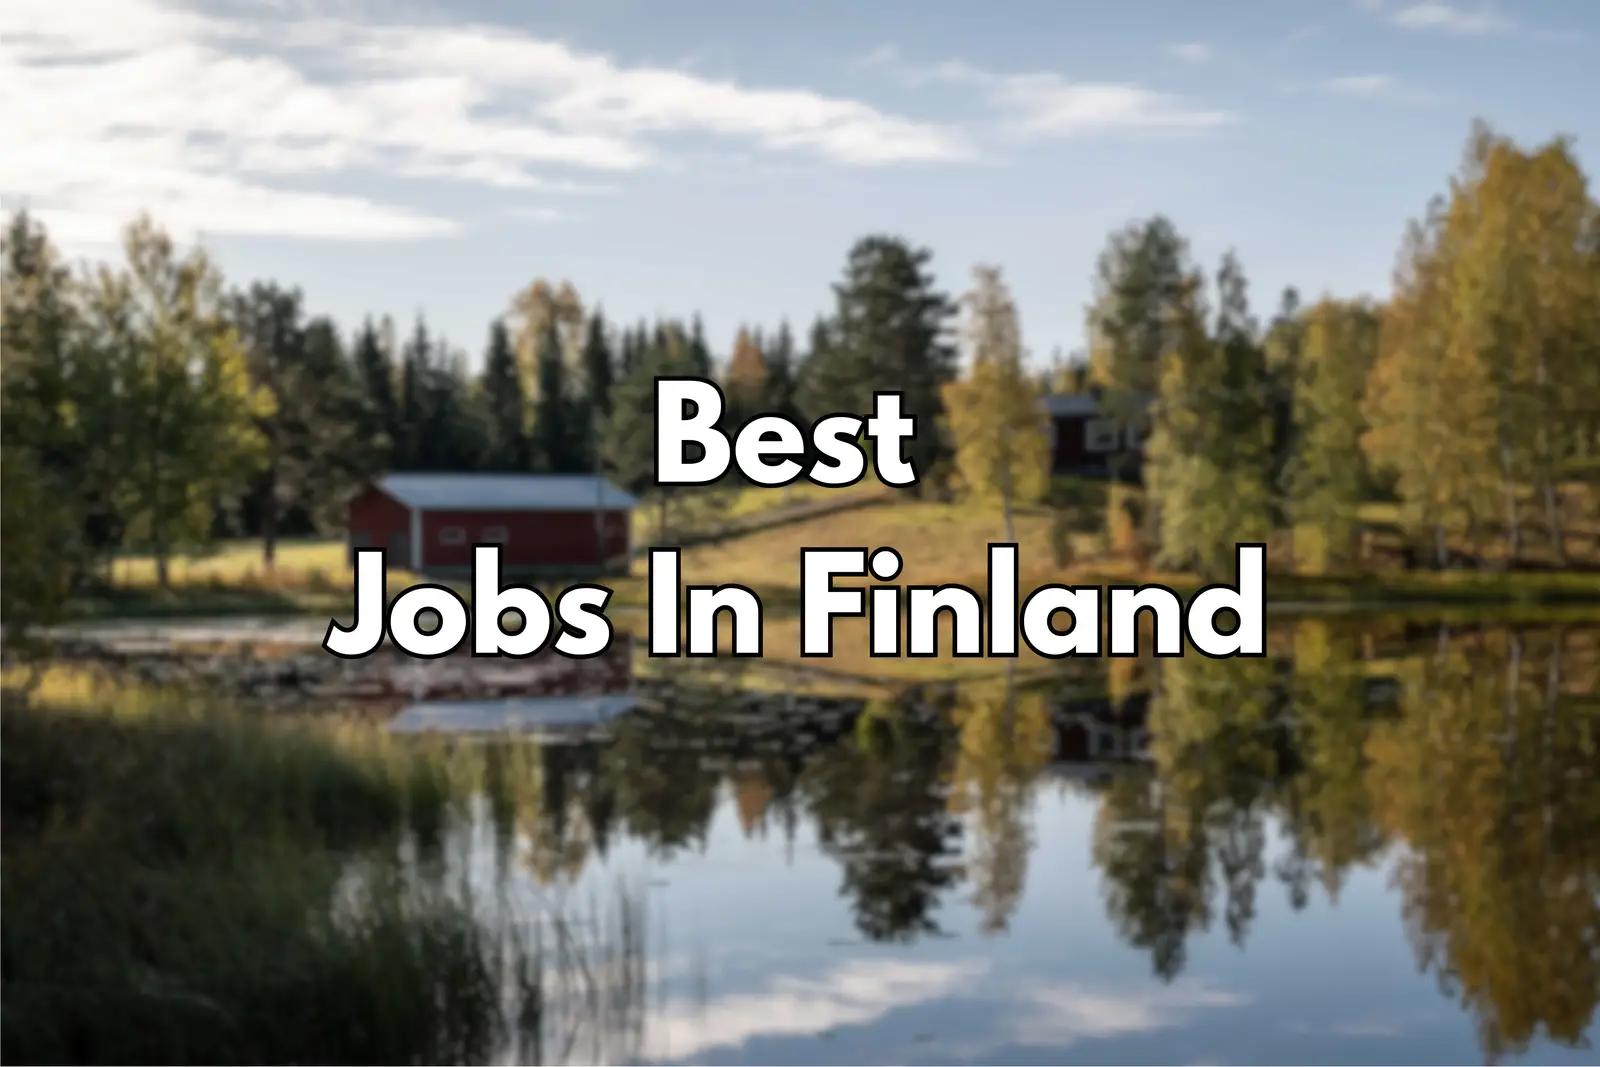 Best Jobs In Finland